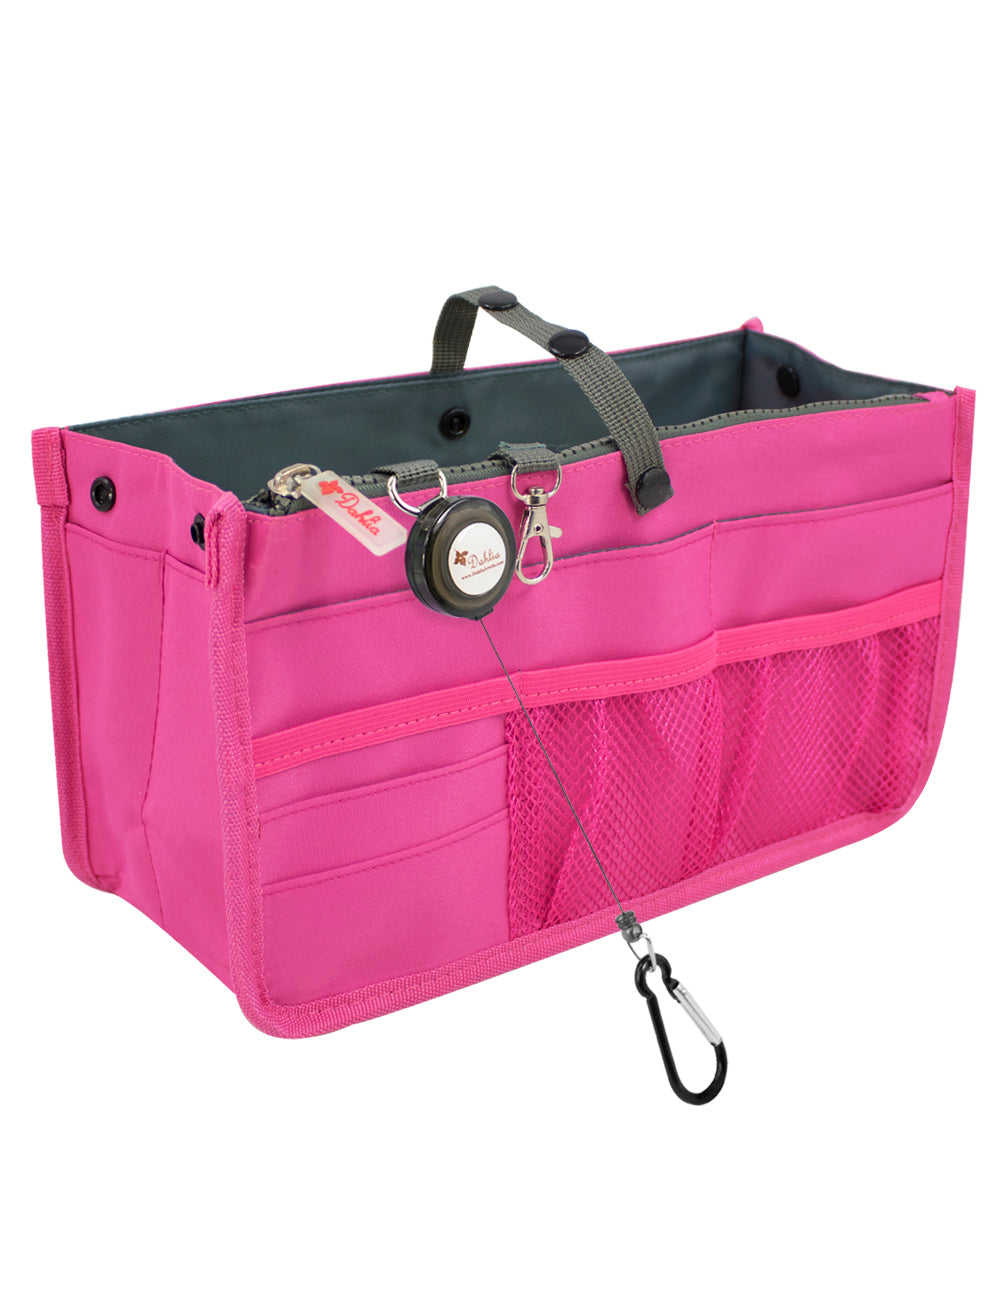 Dahlia Patented Handbag Purse Organizer Insert - Sturdy Flexible